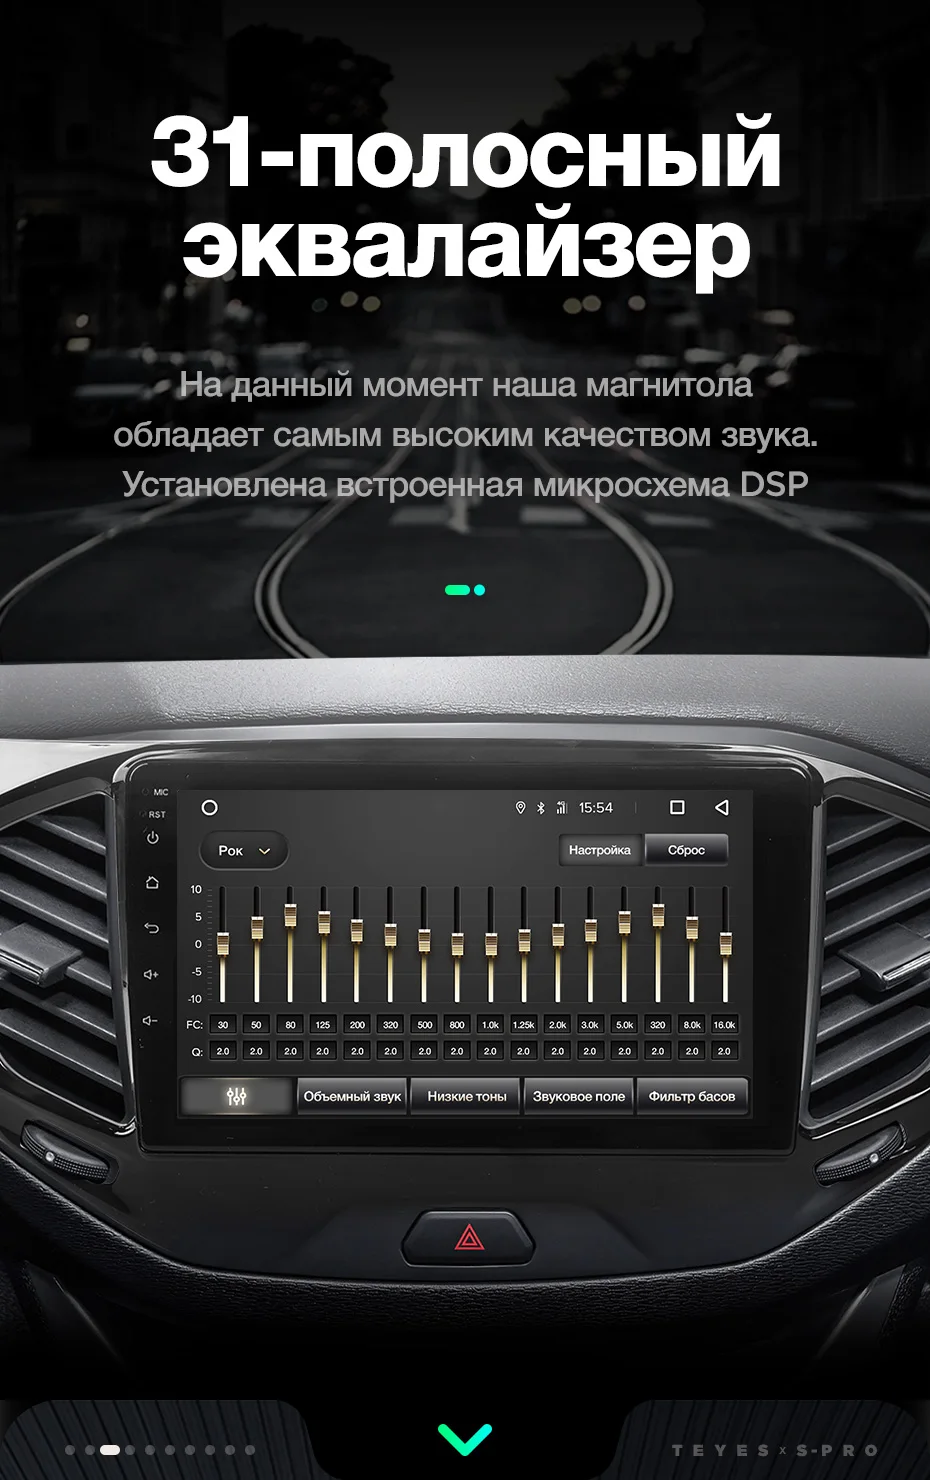 Top TEYES SPRO For Lada VESTA 2015-2019 Car Radio Multimedia Video Player Navigation GPS Android 8.1 Accessories Sedan No dvd 2 din 14